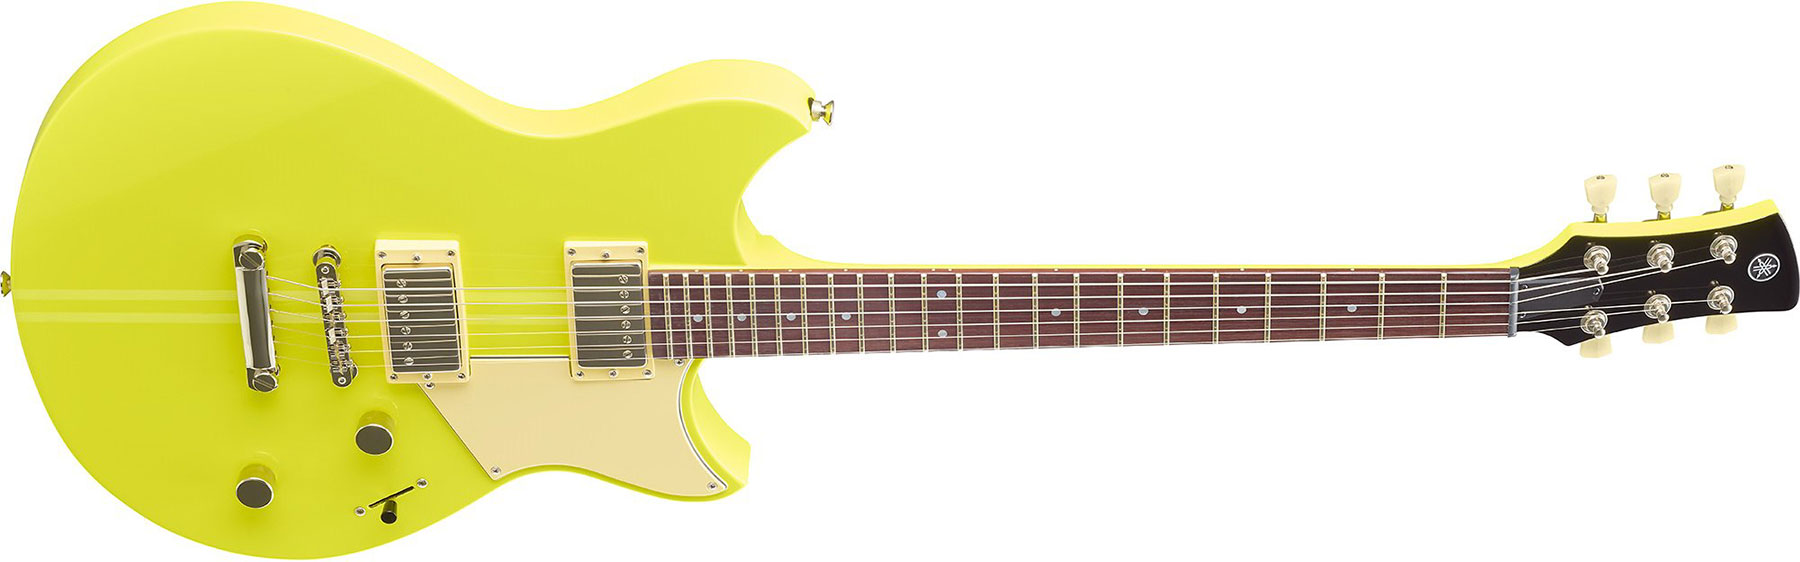 Yamaha Revstar Element RSE20 - neon yellow Solid body electric guitar yellow